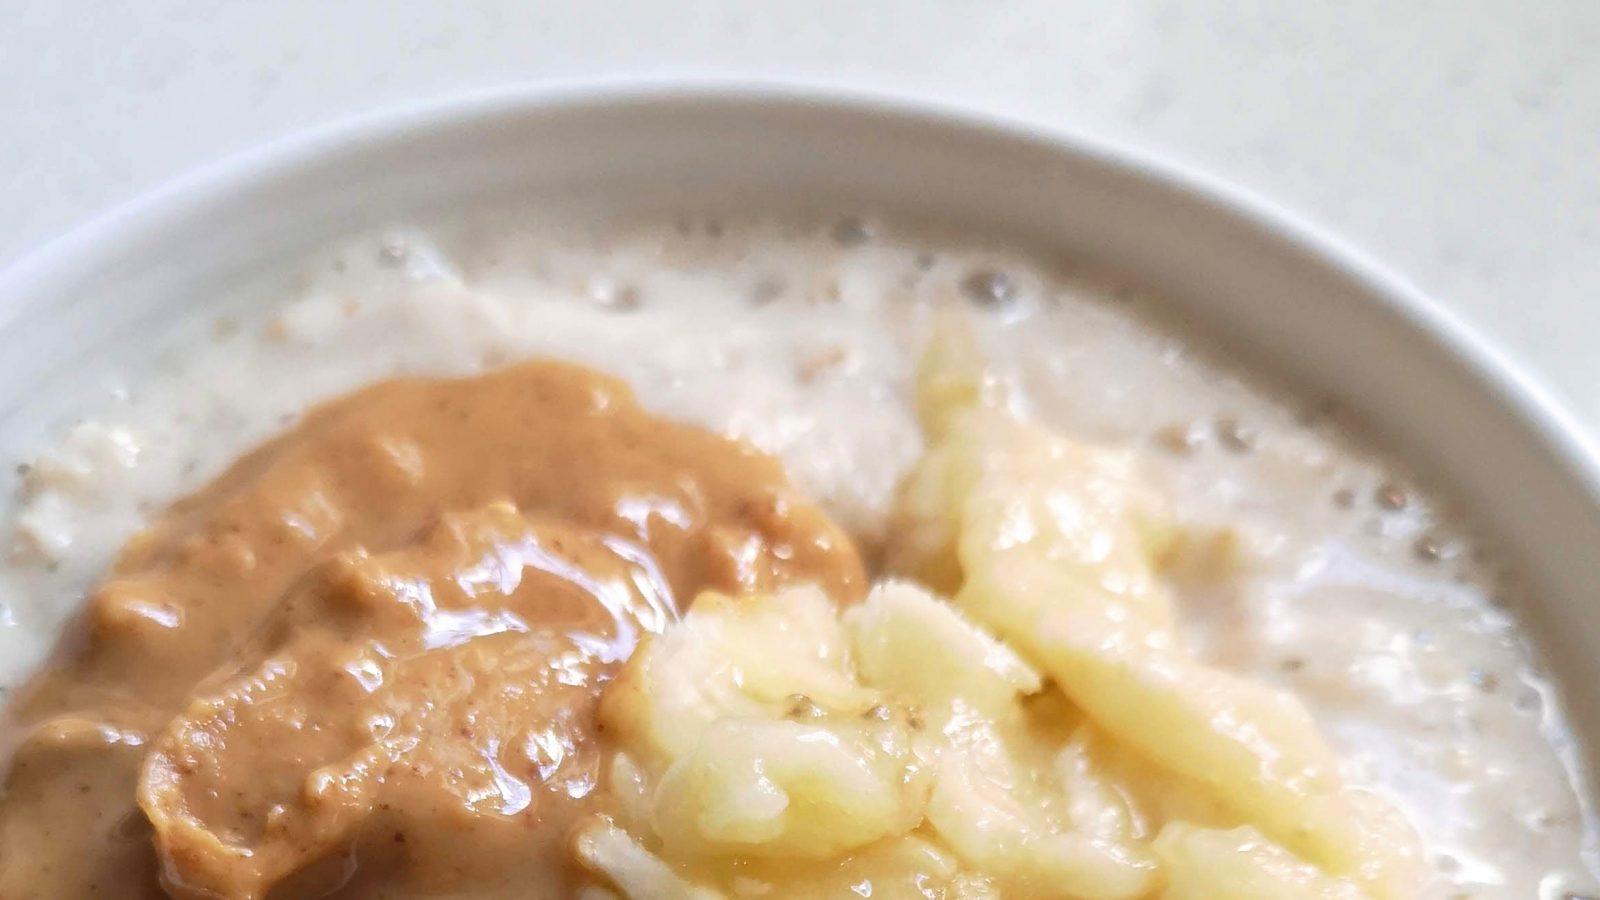 Porridge with banana and peanut butter